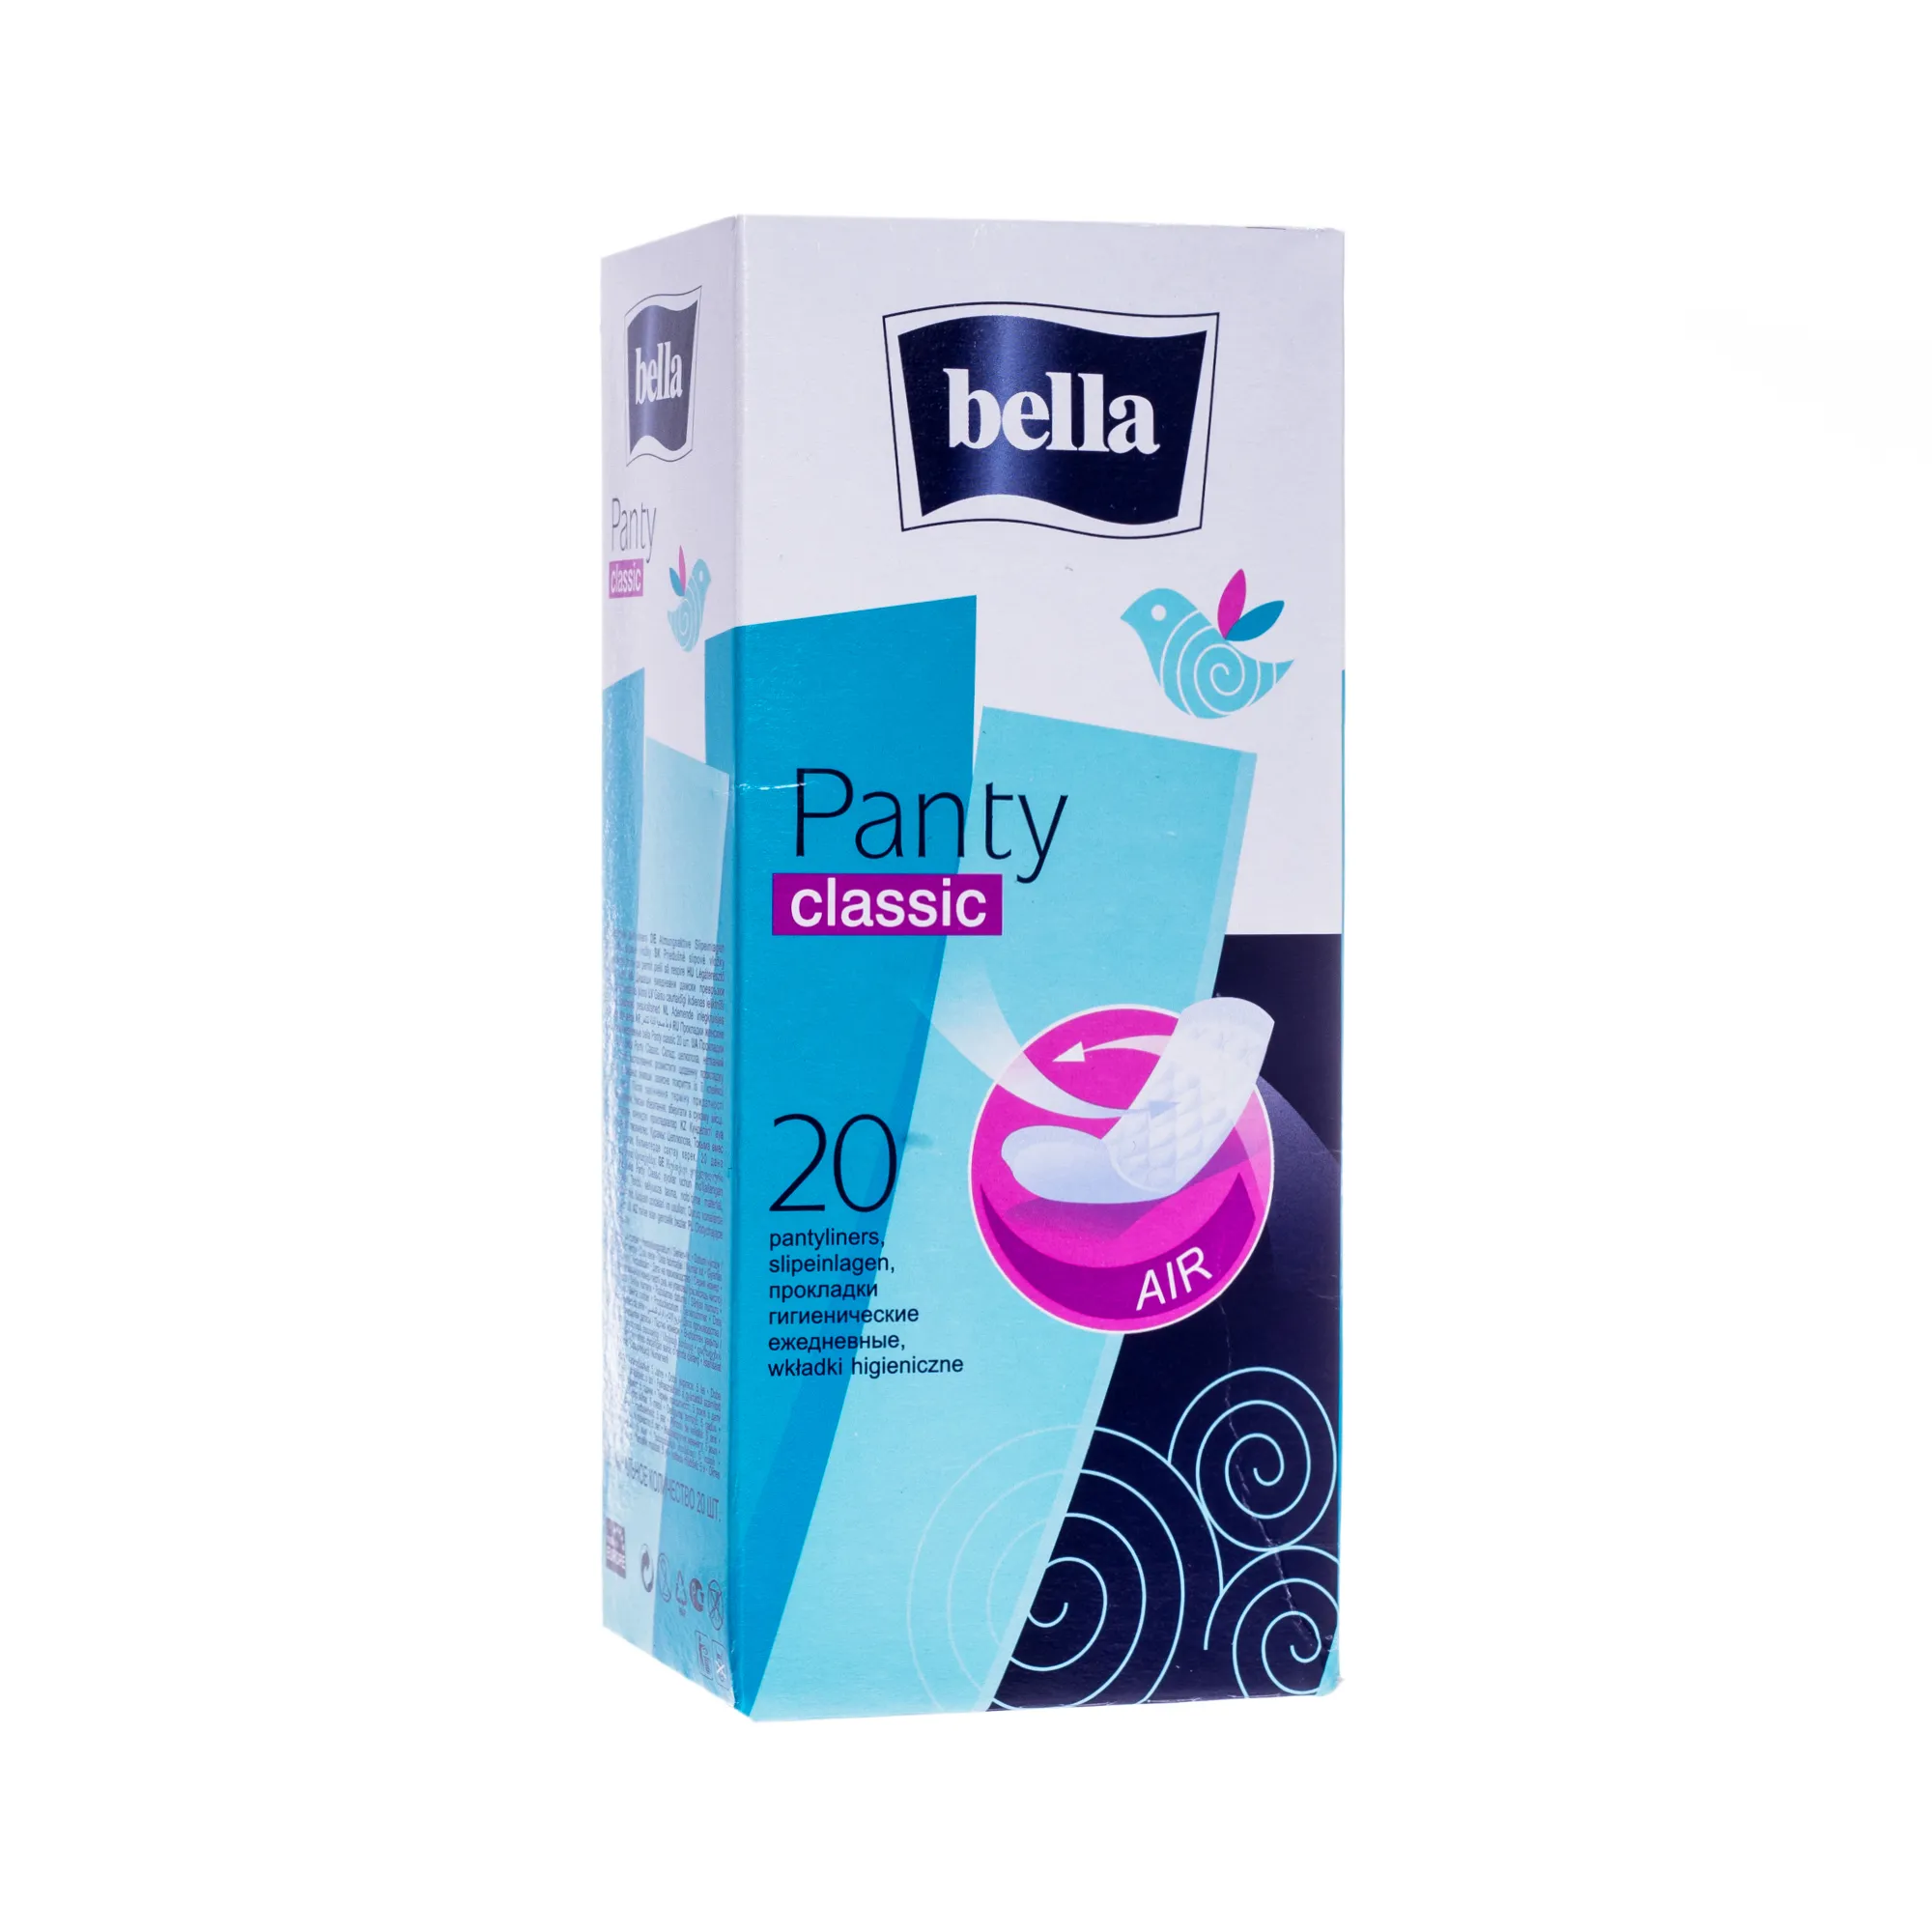 Bella Panty Classic Regular, wkładki higieniczne, 20 sztuk